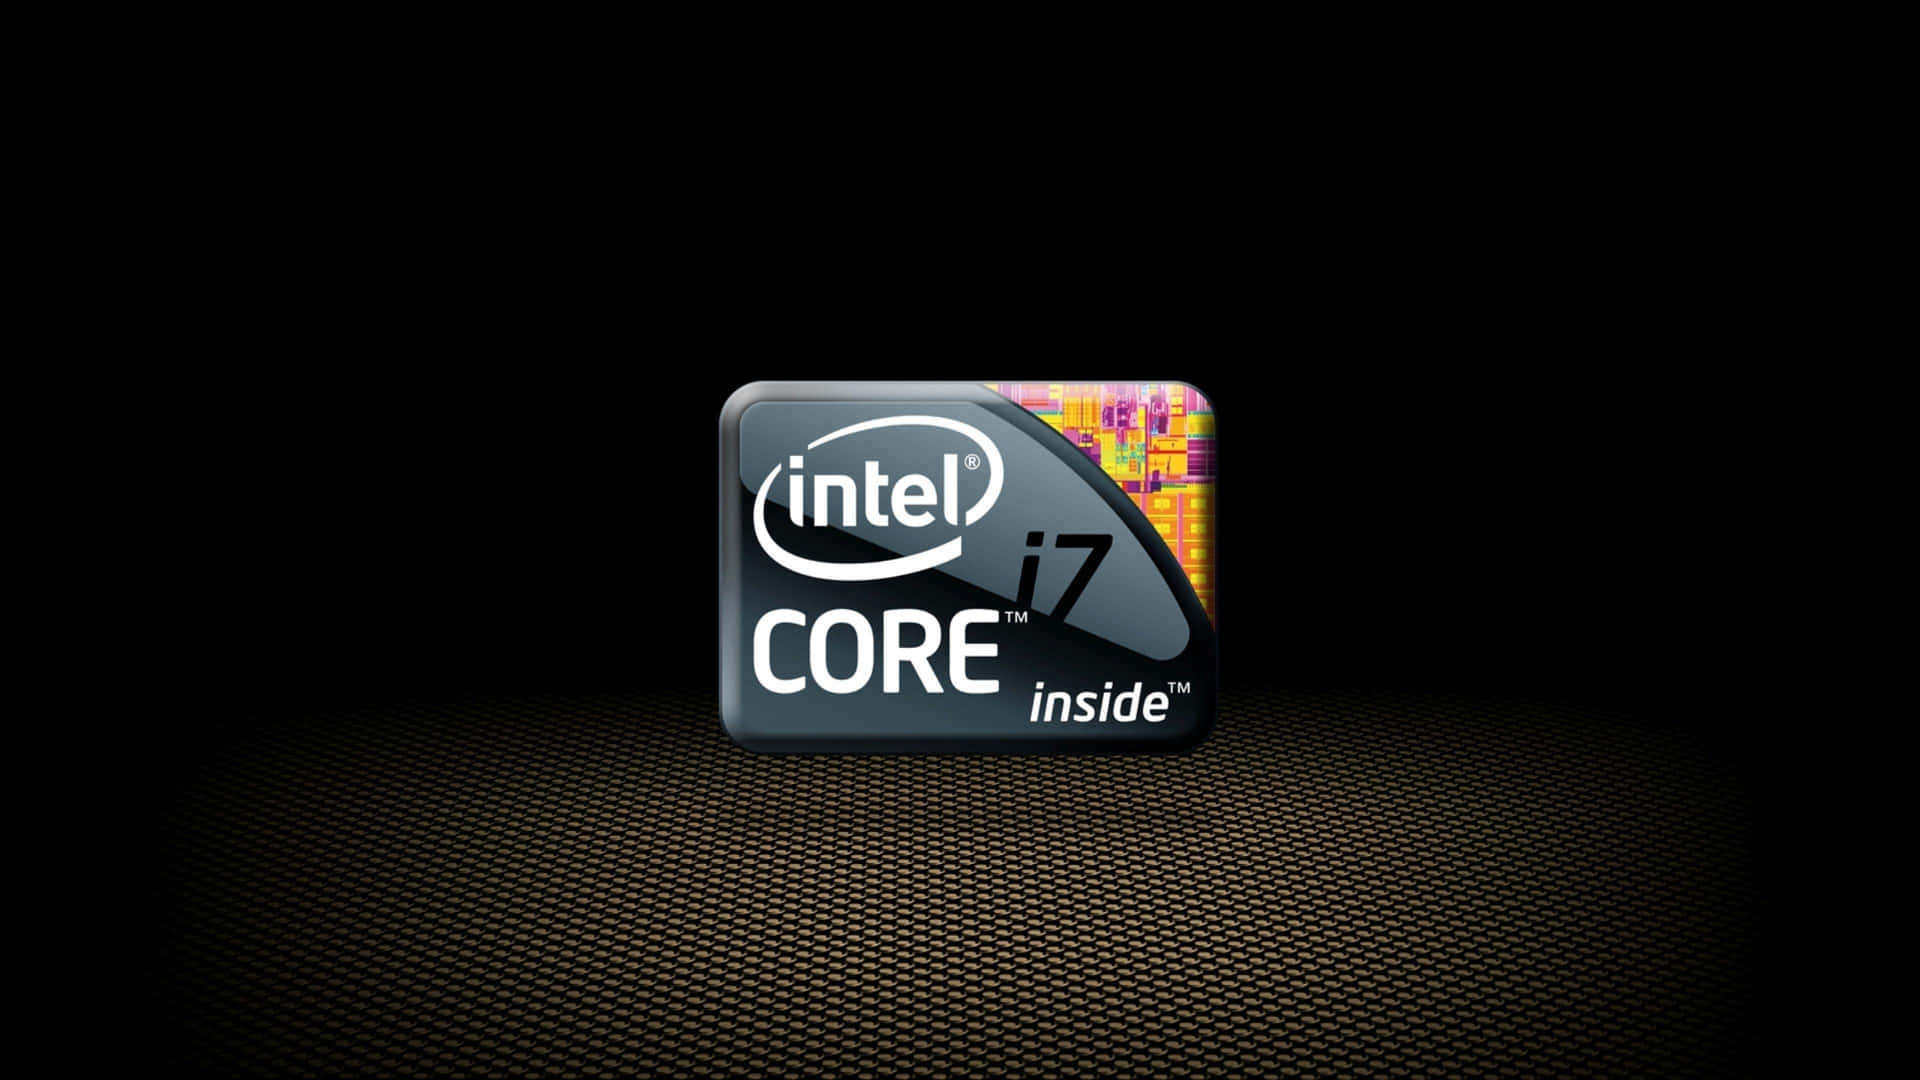 Intel Corei7 Processor Badge Wallpaper